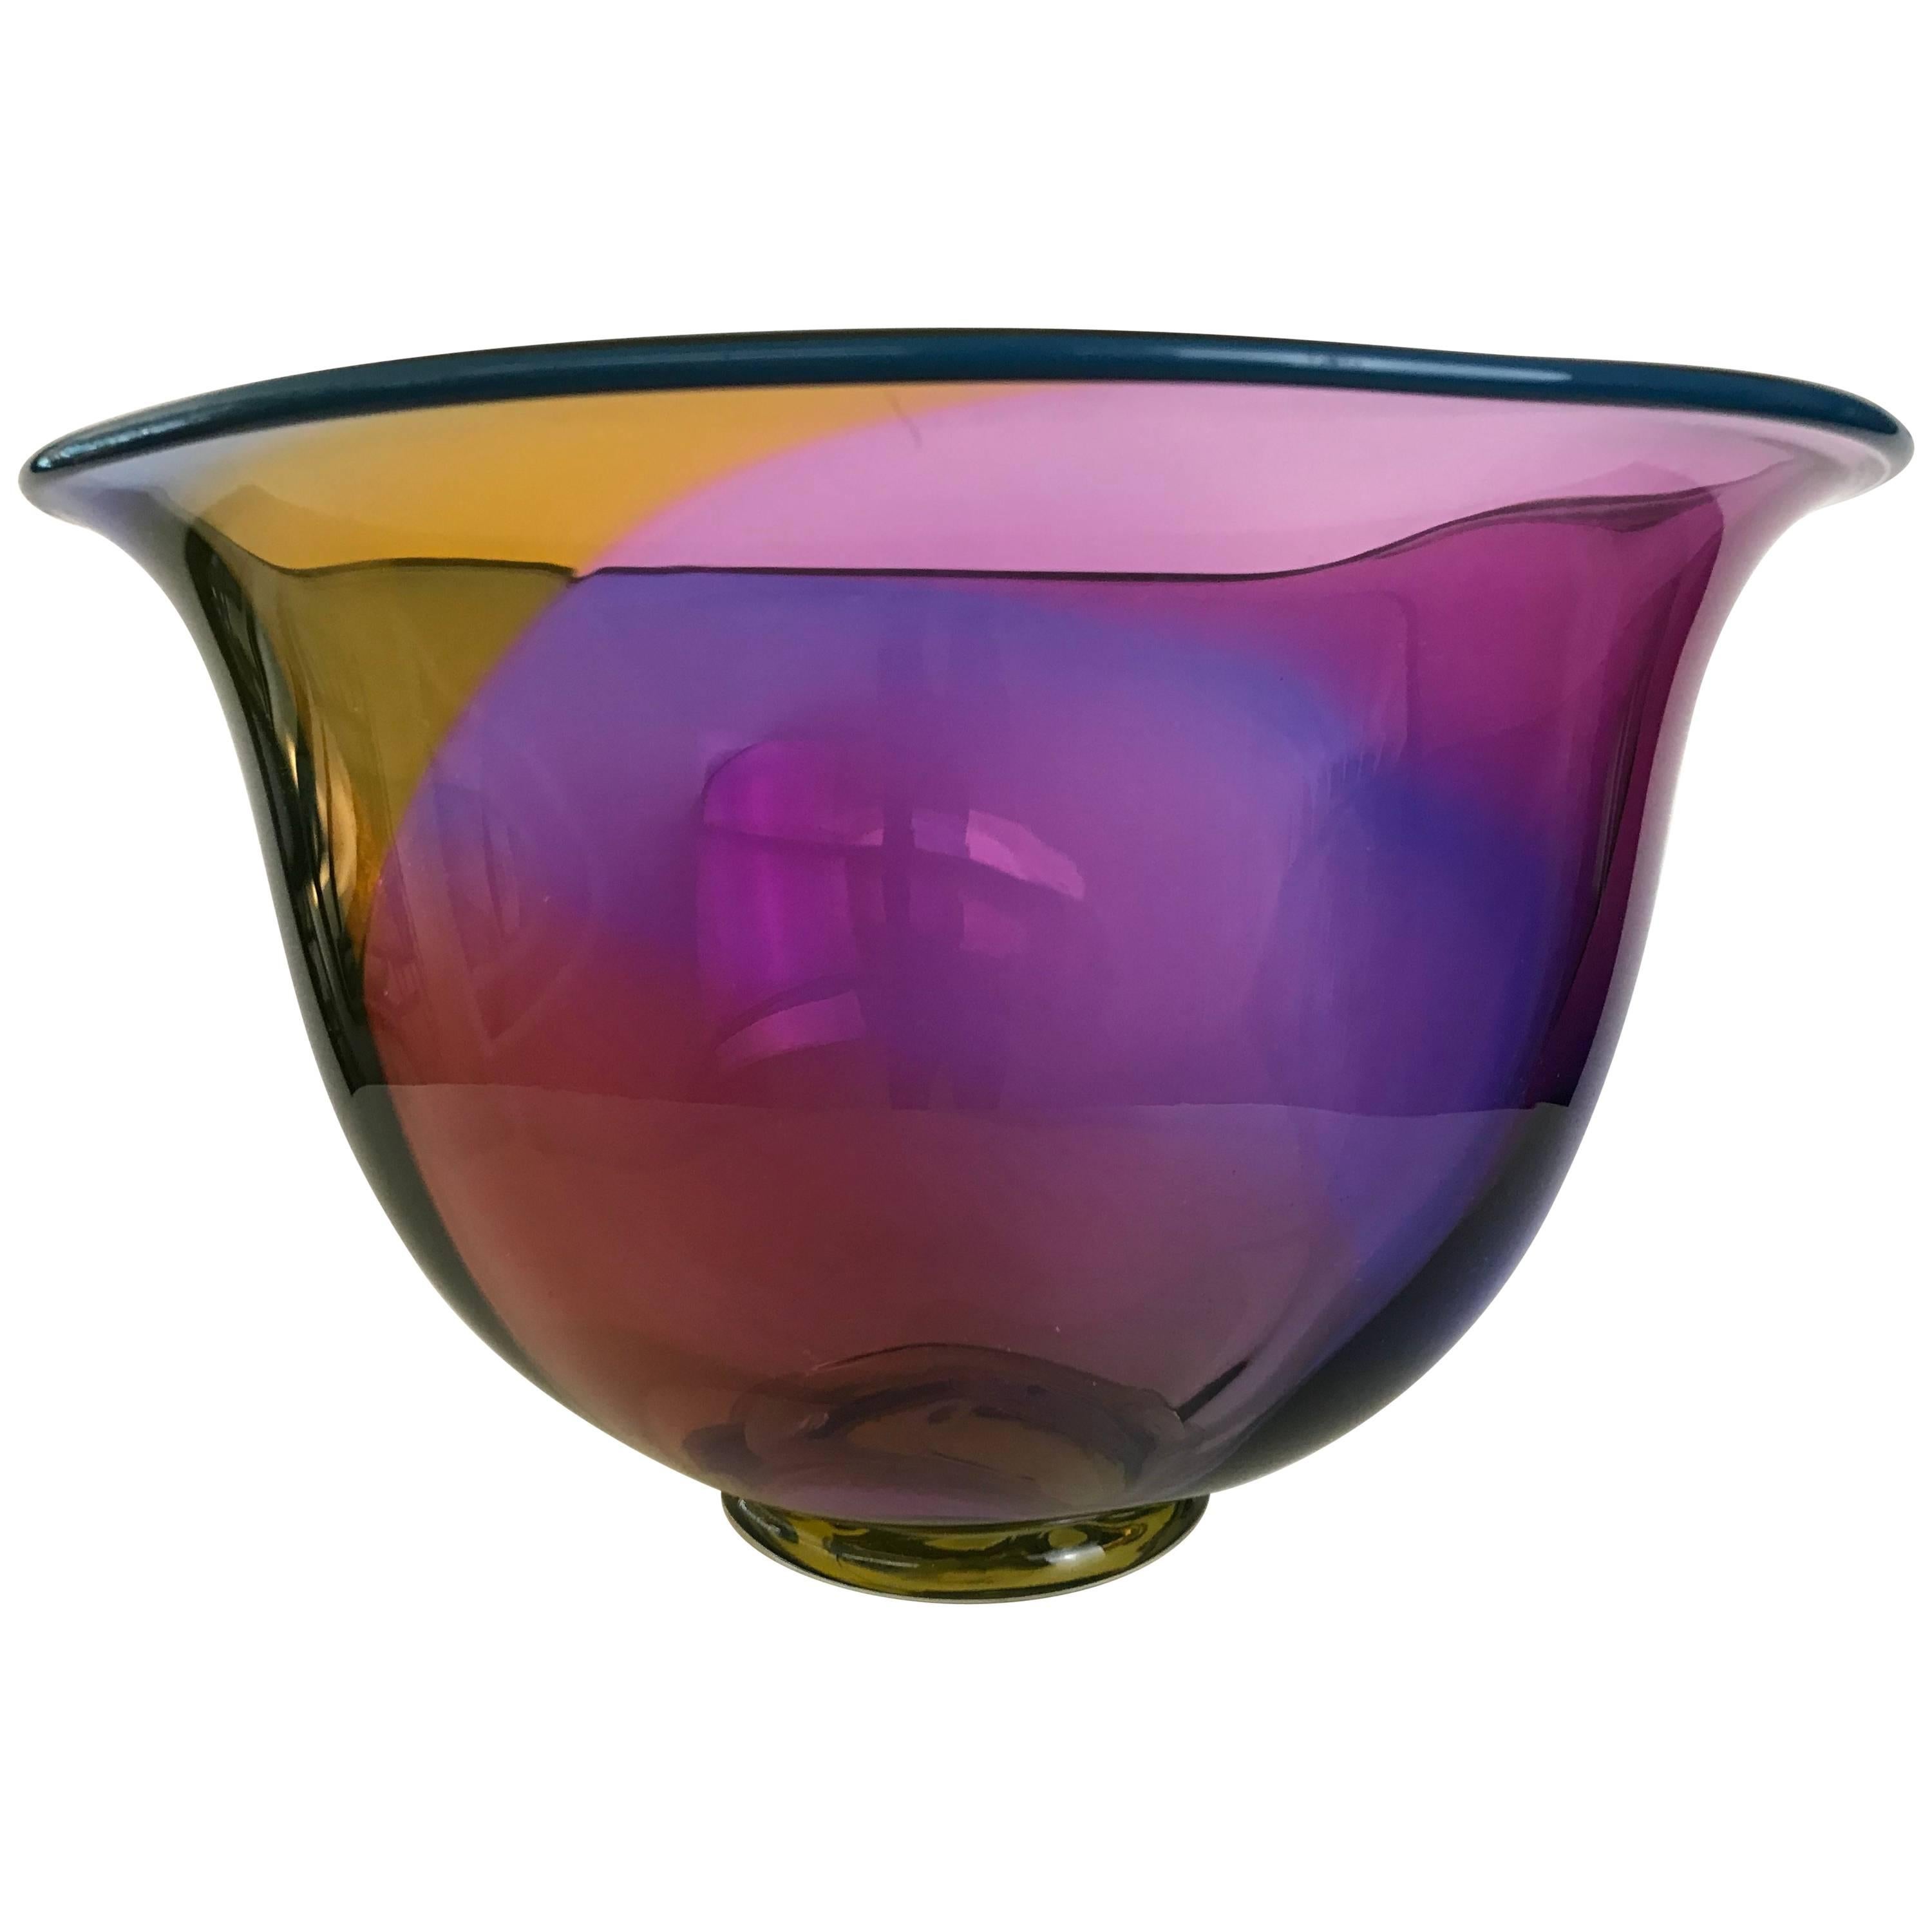 Modern Art Glass Bowl by Jan Erik Ritzman and Sven-Åke Carlsson, Transjö Hytta